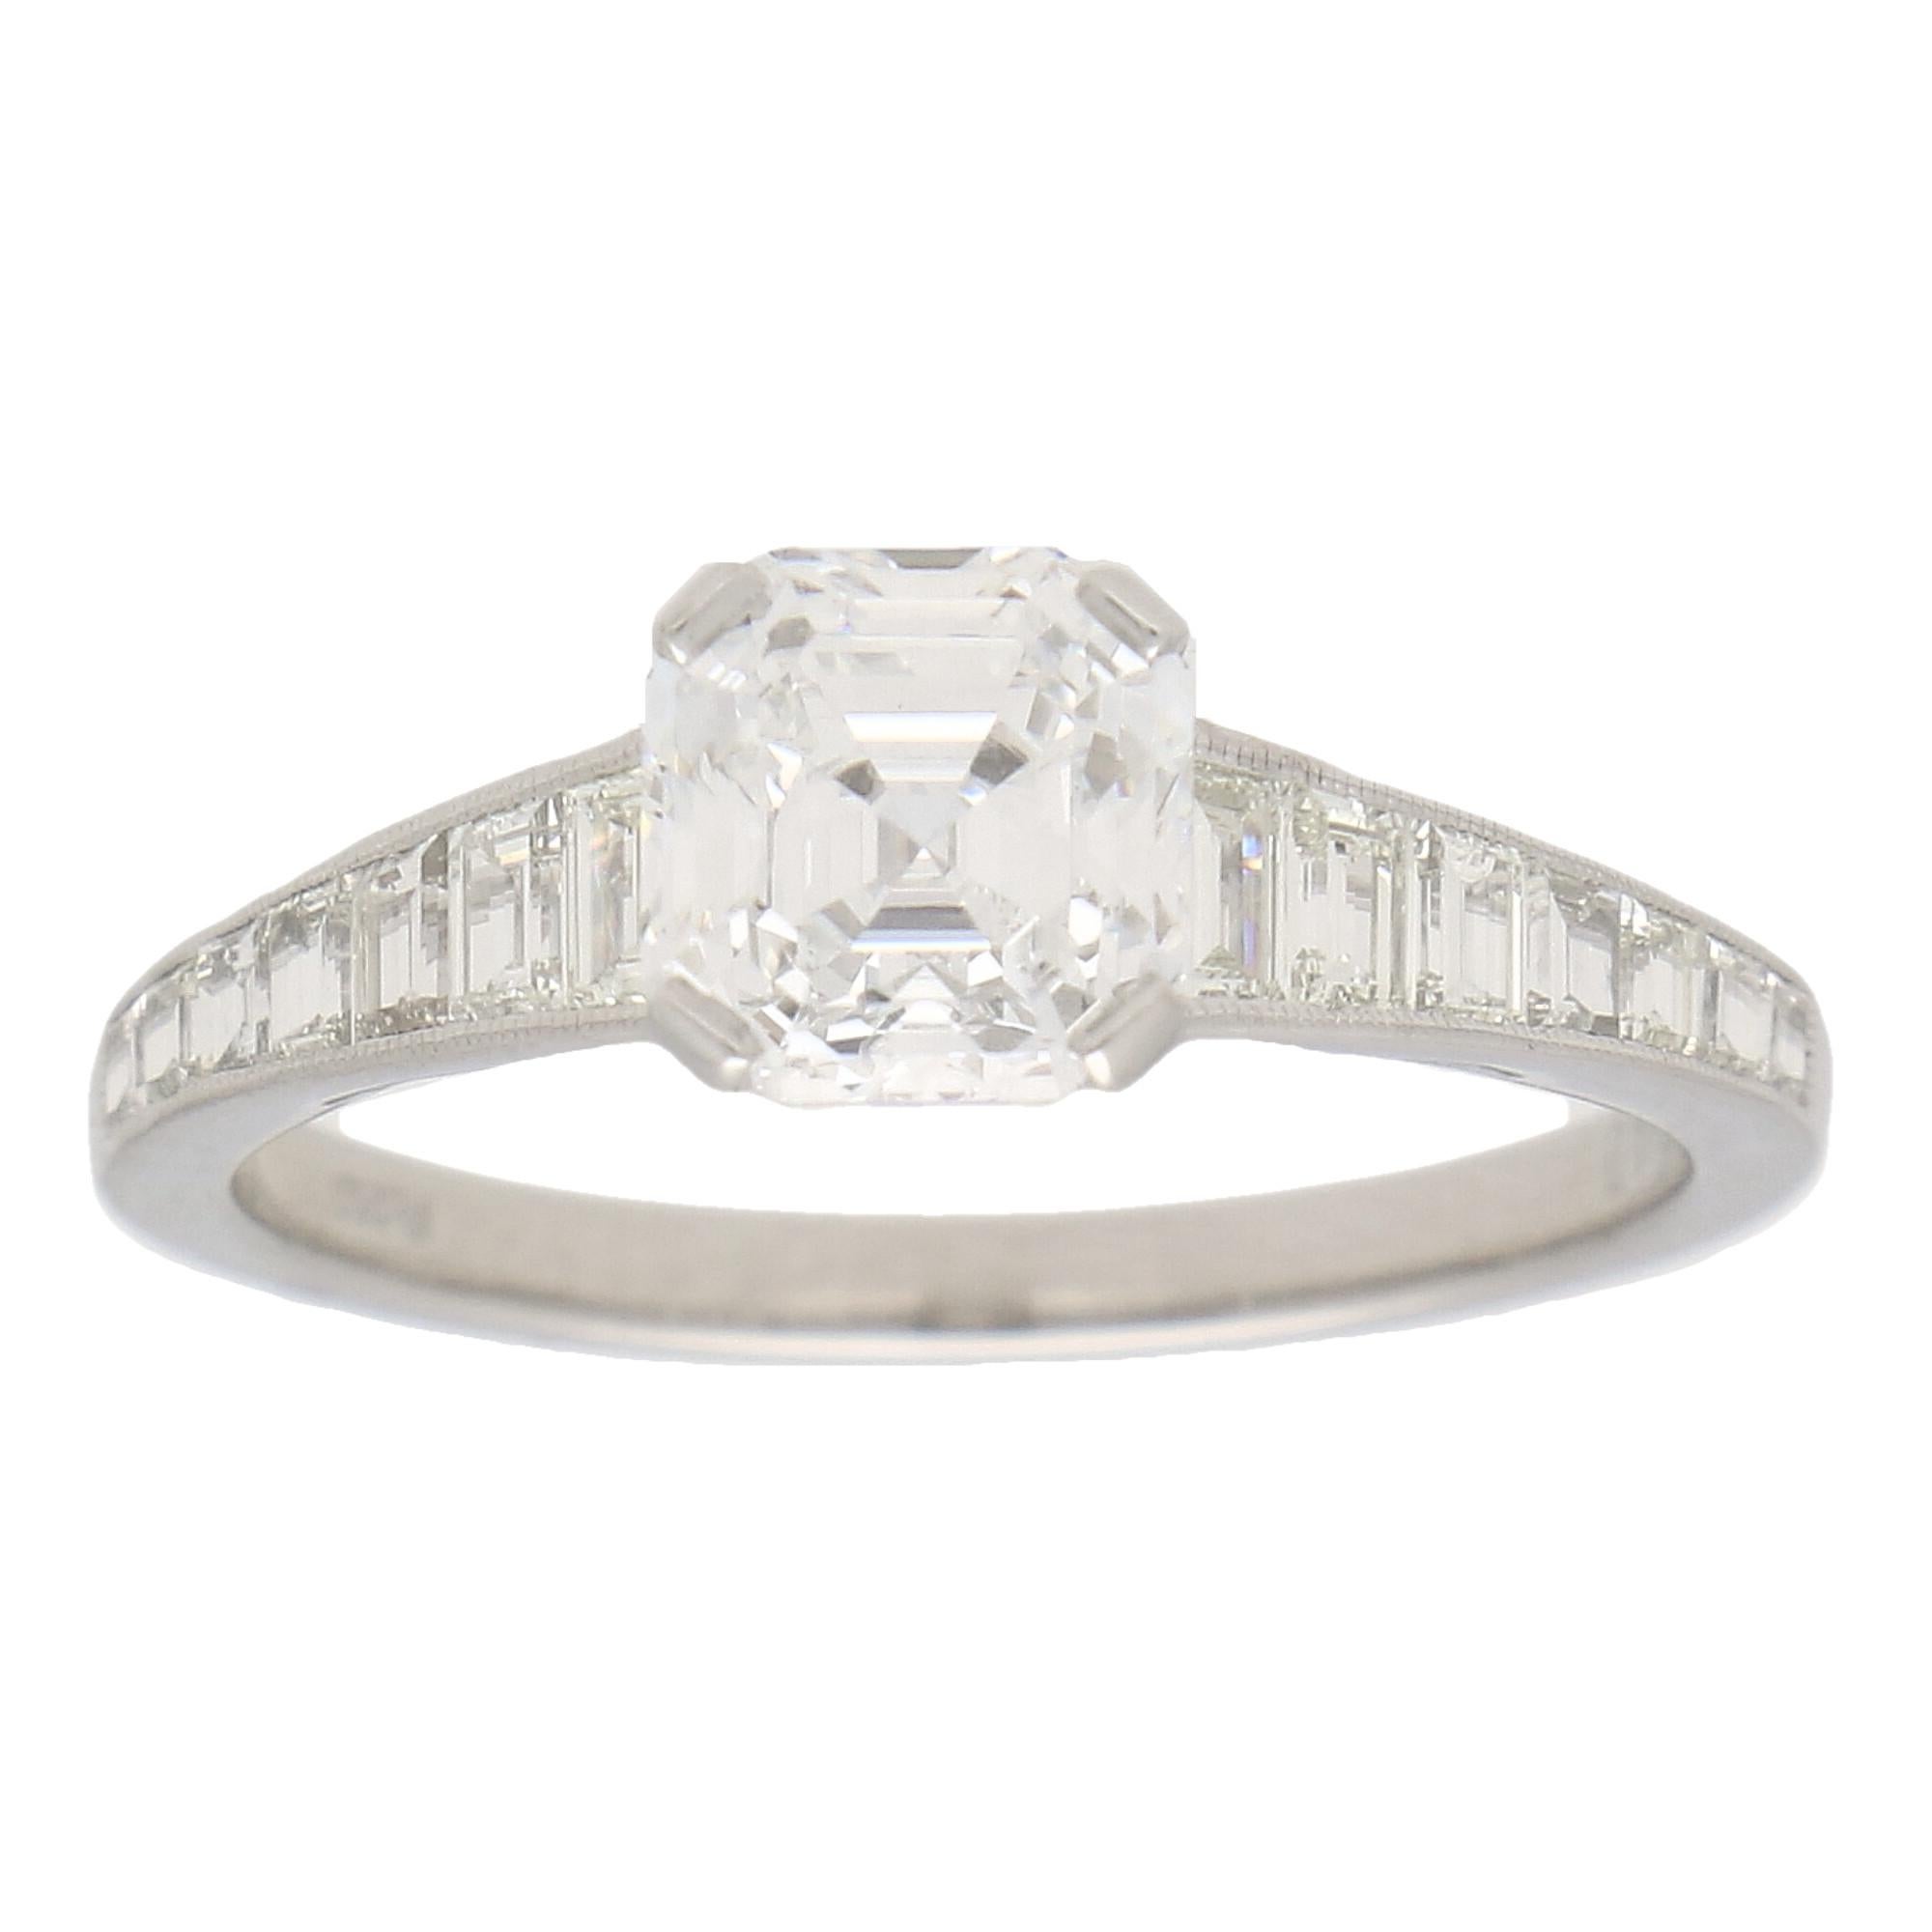 Women's or Men's GIA Certified Art Deco Style Asscher Cut Diamond Engagement Ring in Platinum